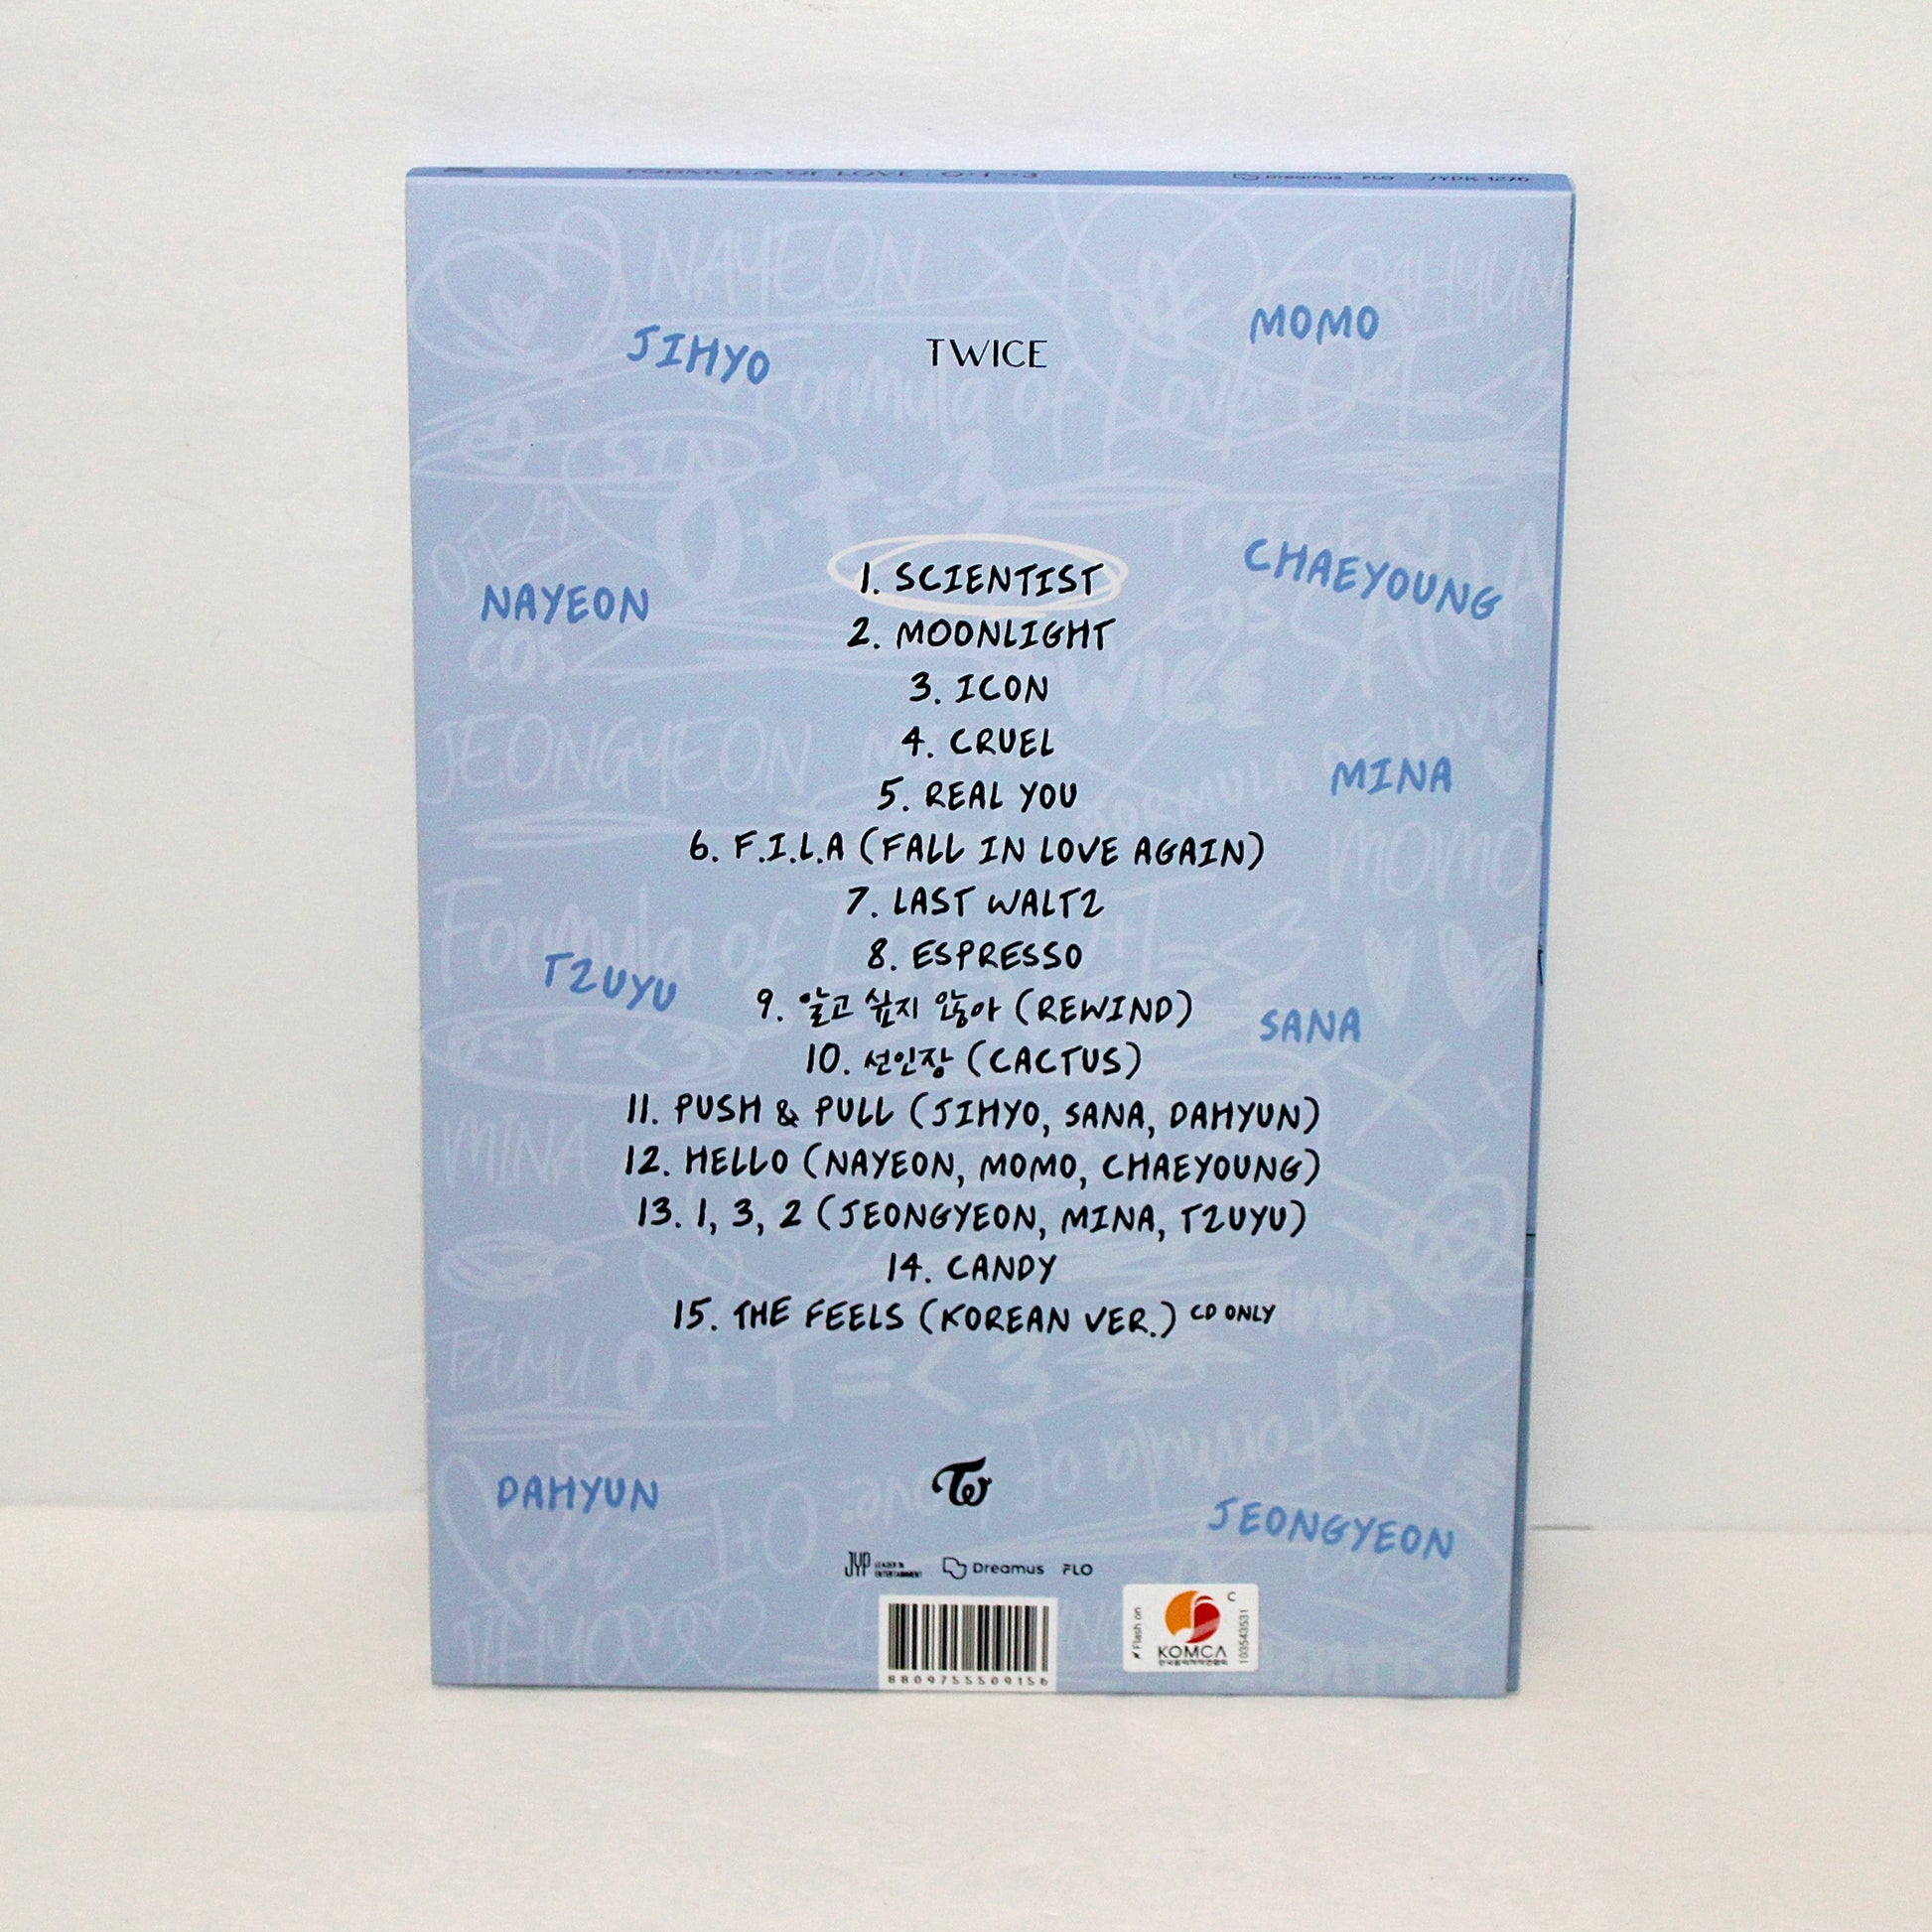 TWICE - TWICE - The 3rd Album [Formula of Love: O+T=<3] (STUDY